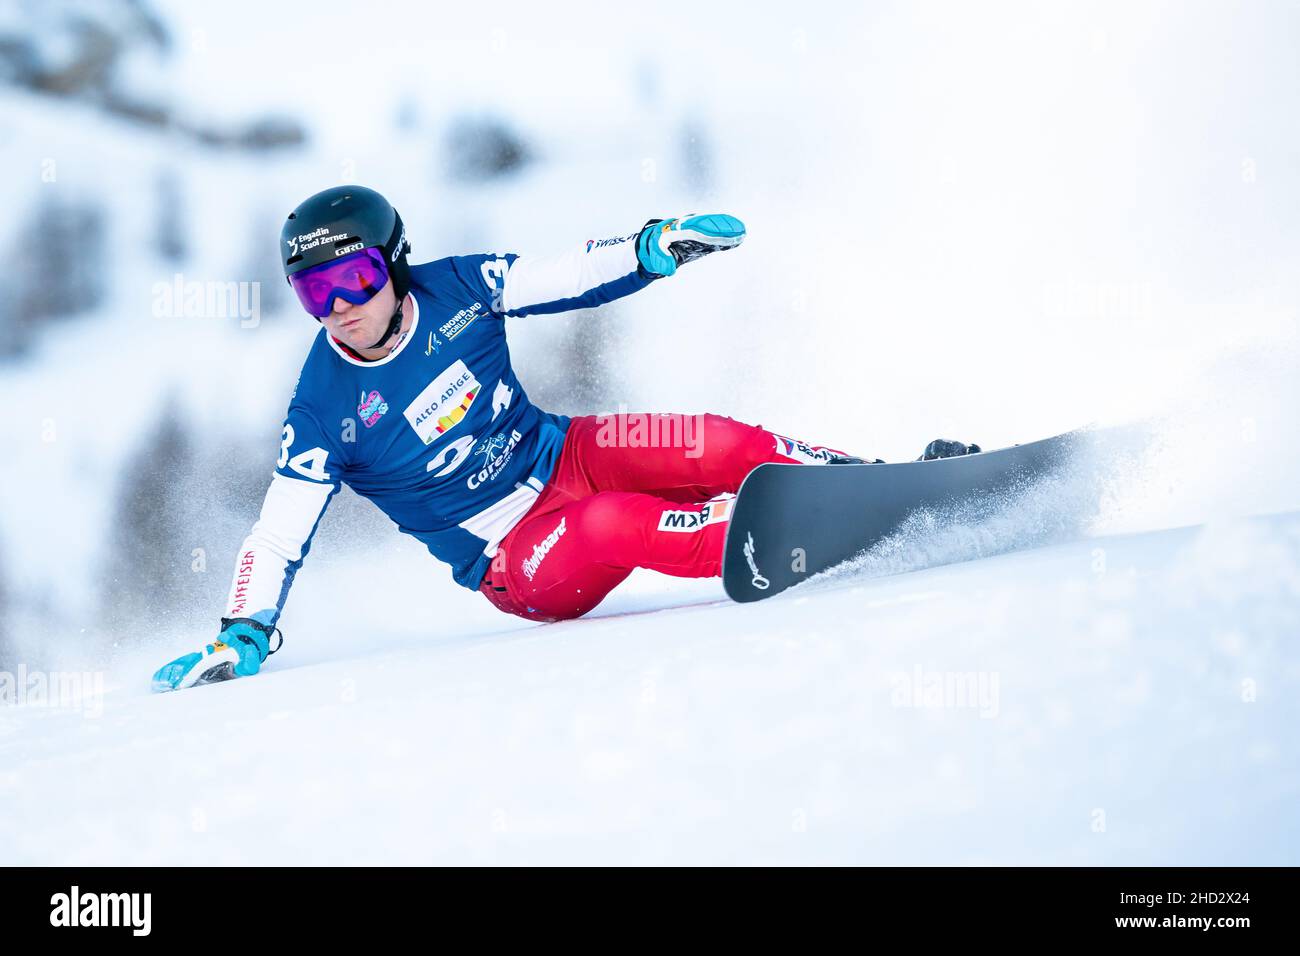 GALMARINI Nevin (SUI) competing in the Fis Snowboard World Cup 2022 Men's Parallel Giant Slalom on the Pra Di Tori (Carezza) Course. Stock Photo